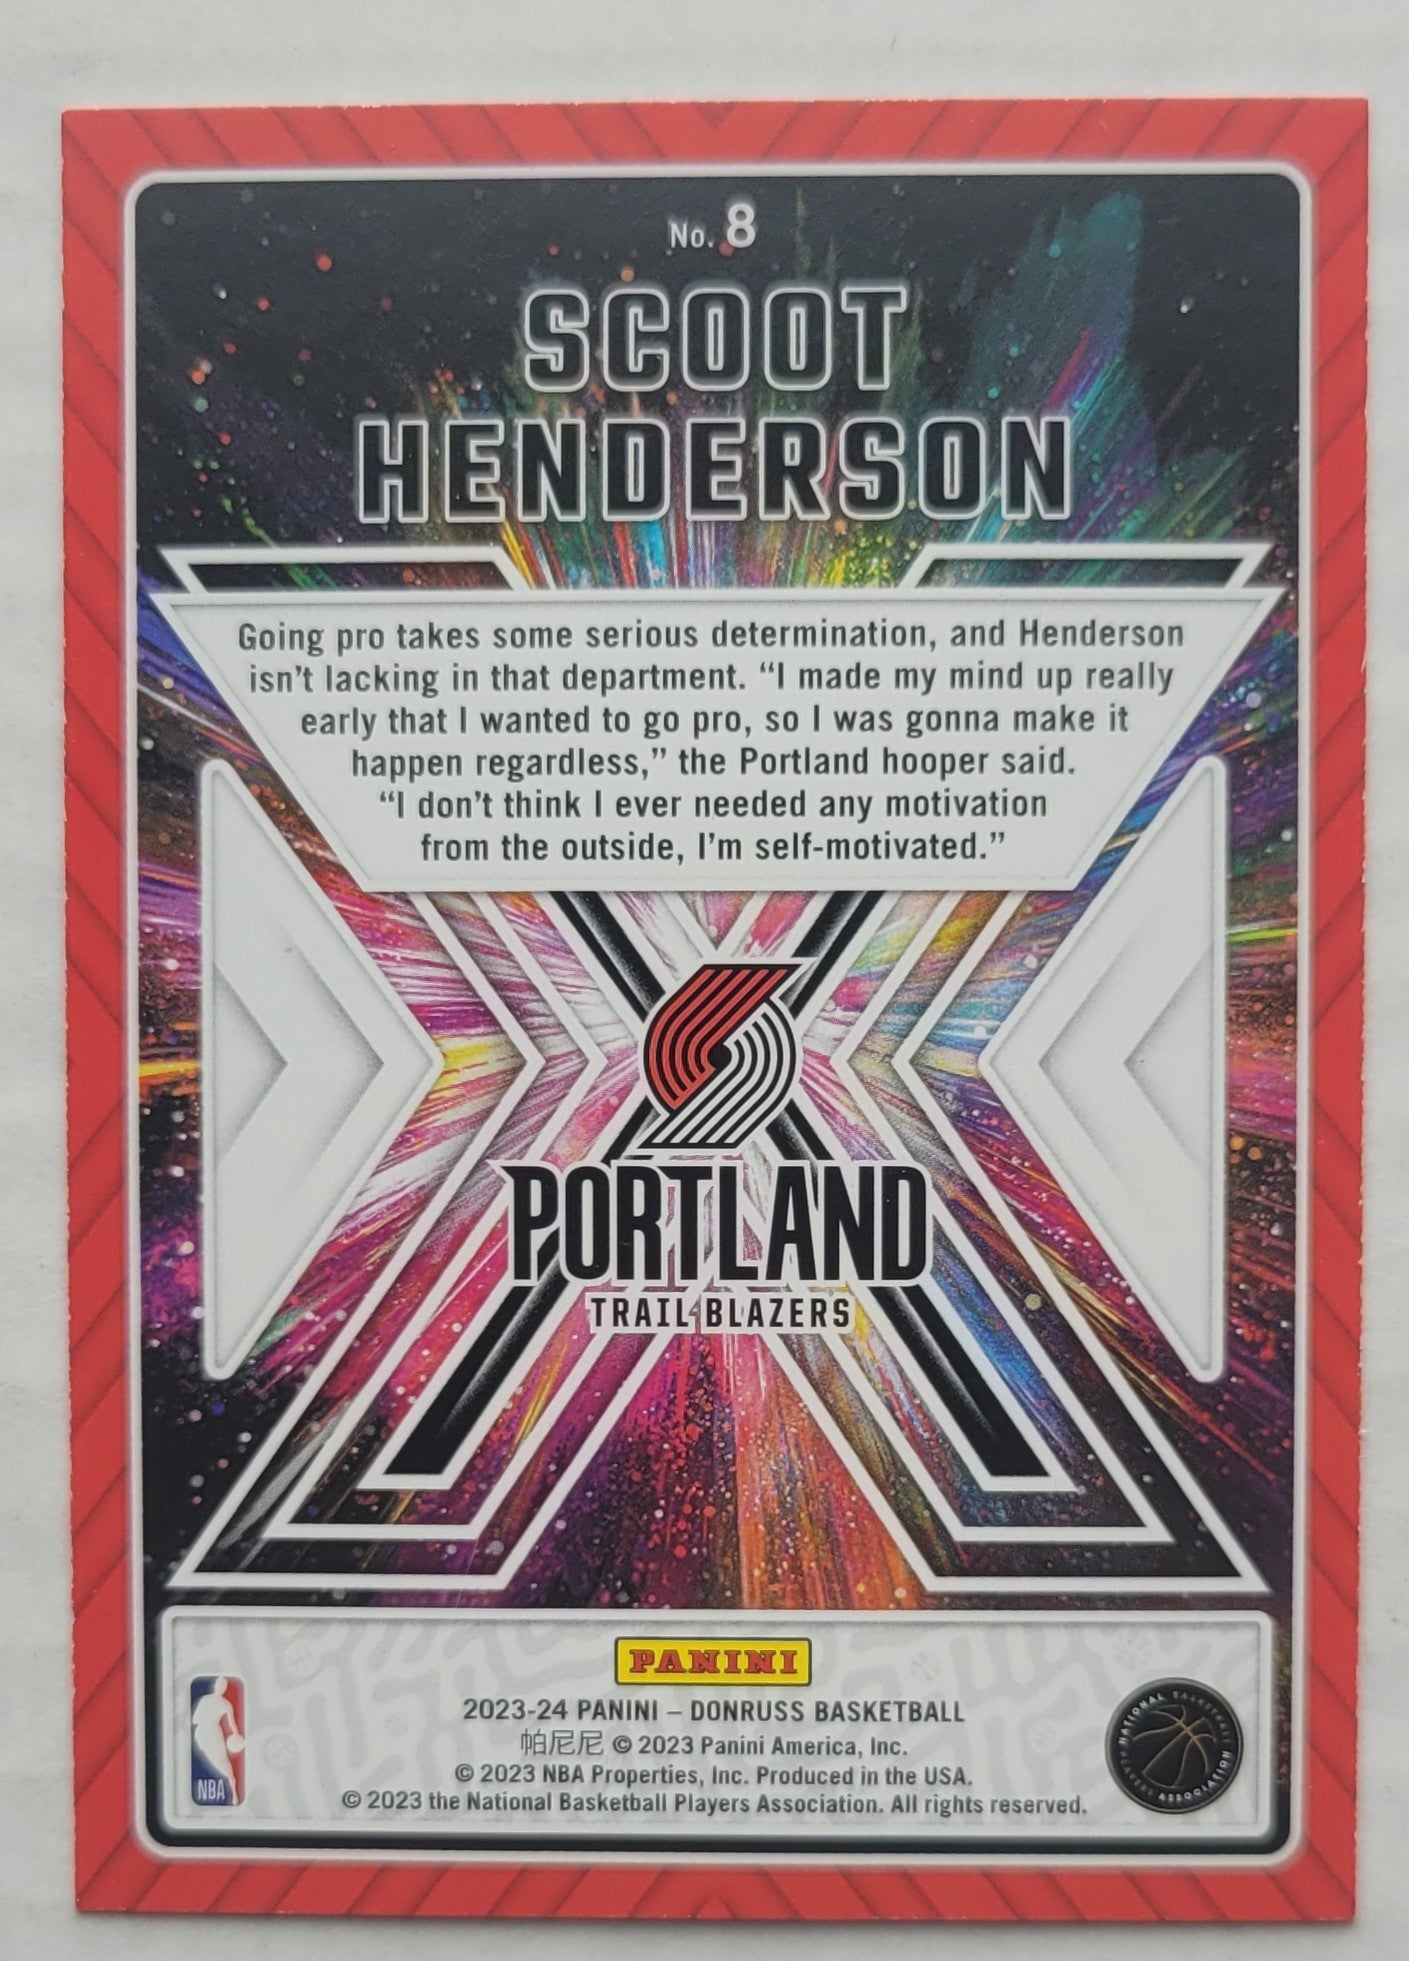 Scoot Henderson - 2023-24 Donruss Great X-Pectations #8